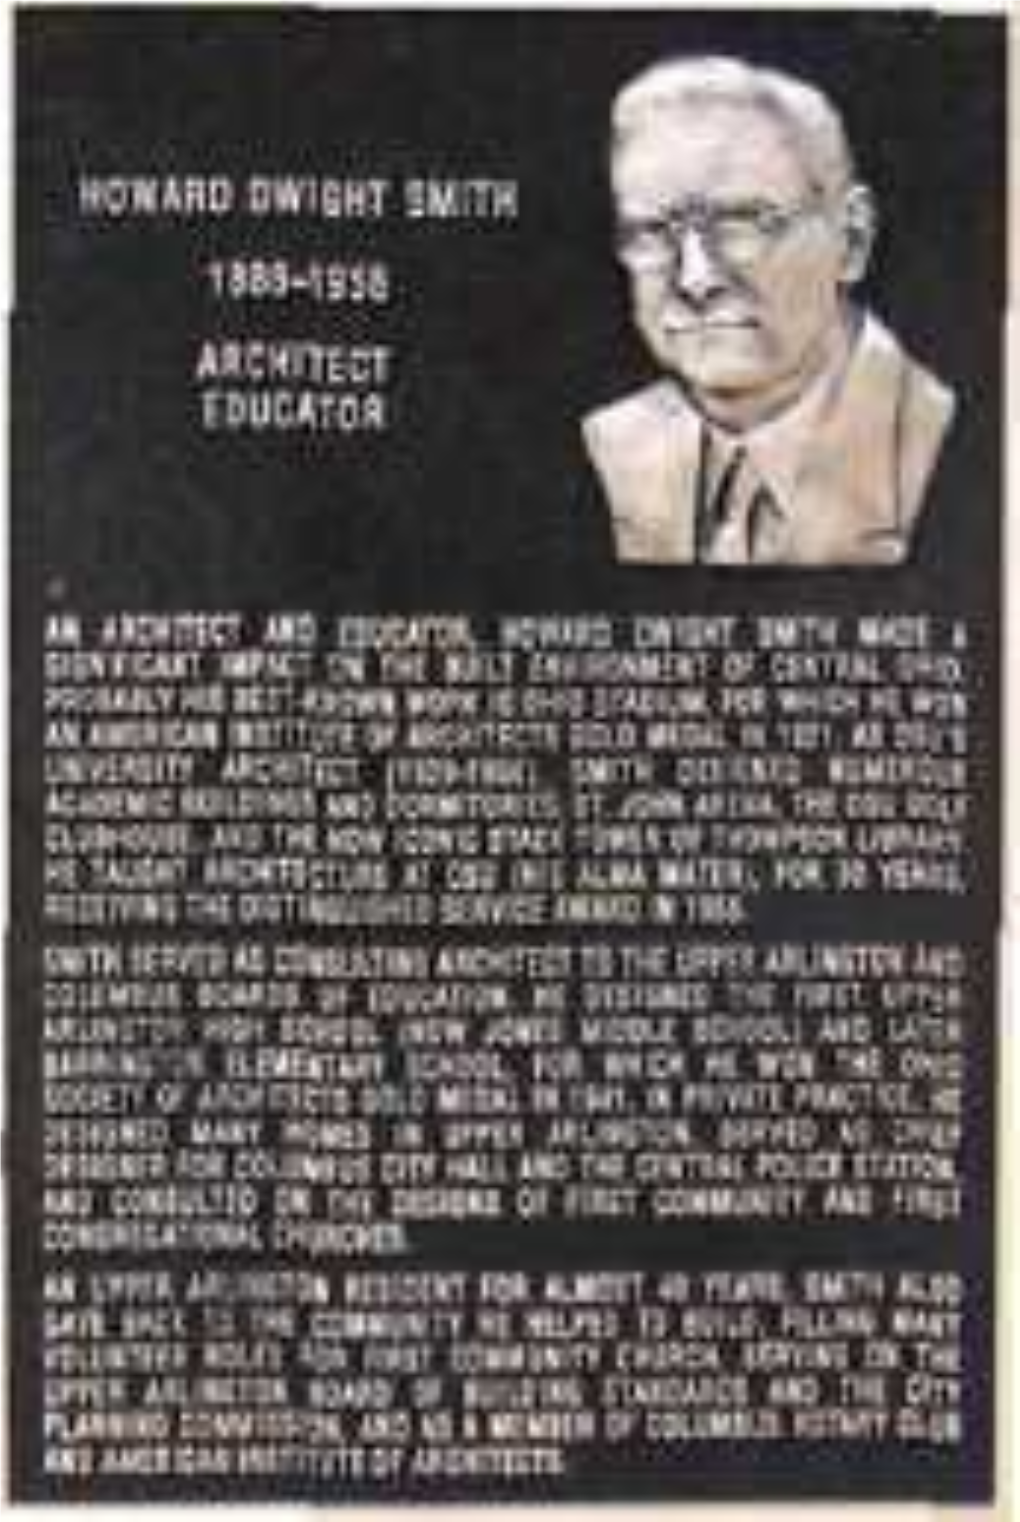 1886-1958 Architect Educator